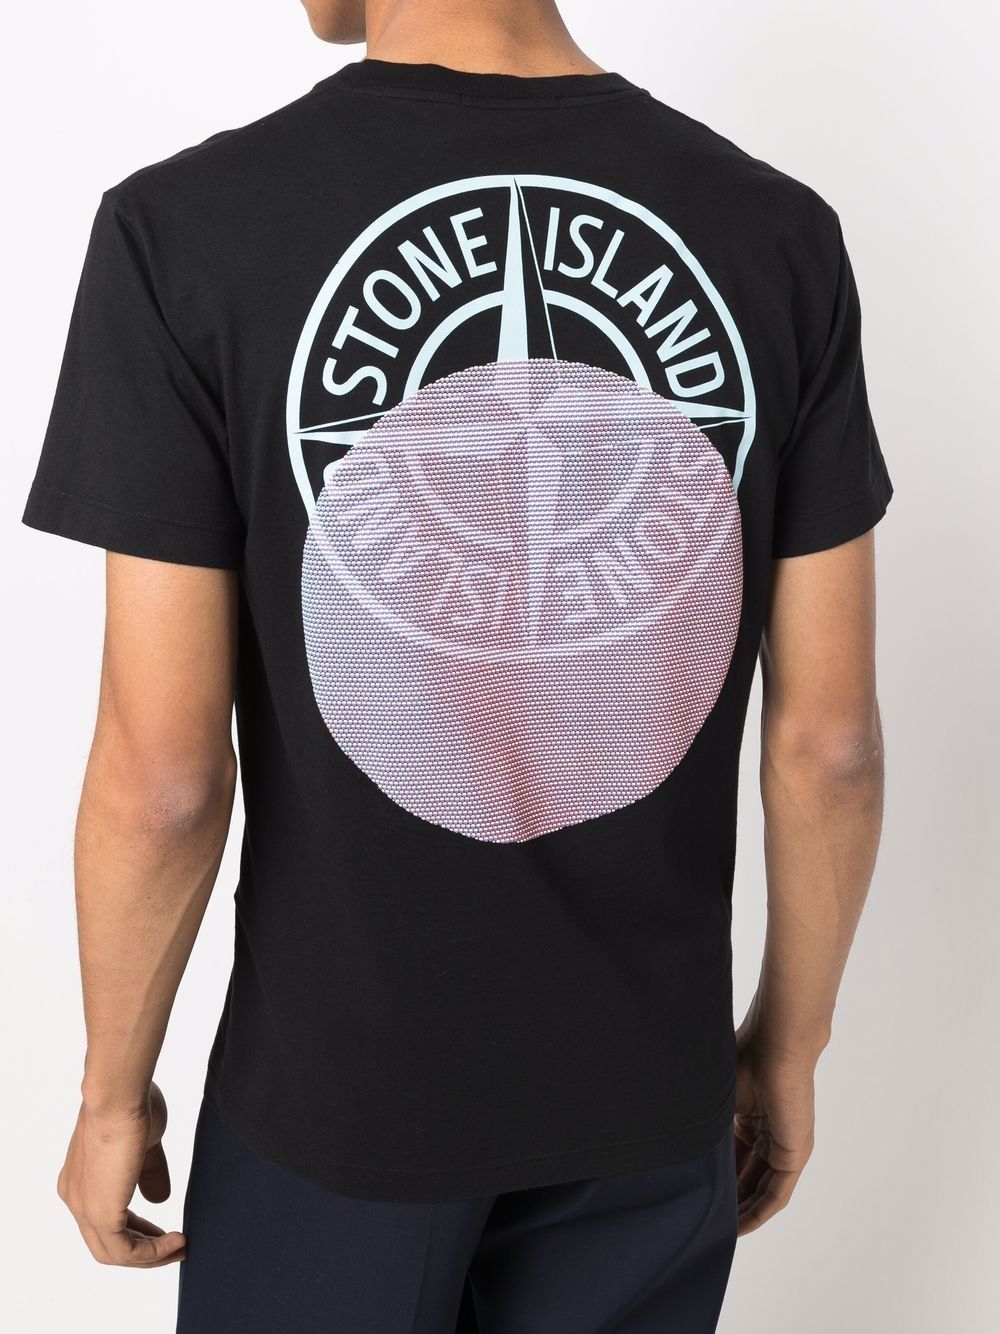 STONE ISLAND Logo Circle T-Shirt Black - MAISONDEFASHION.COM